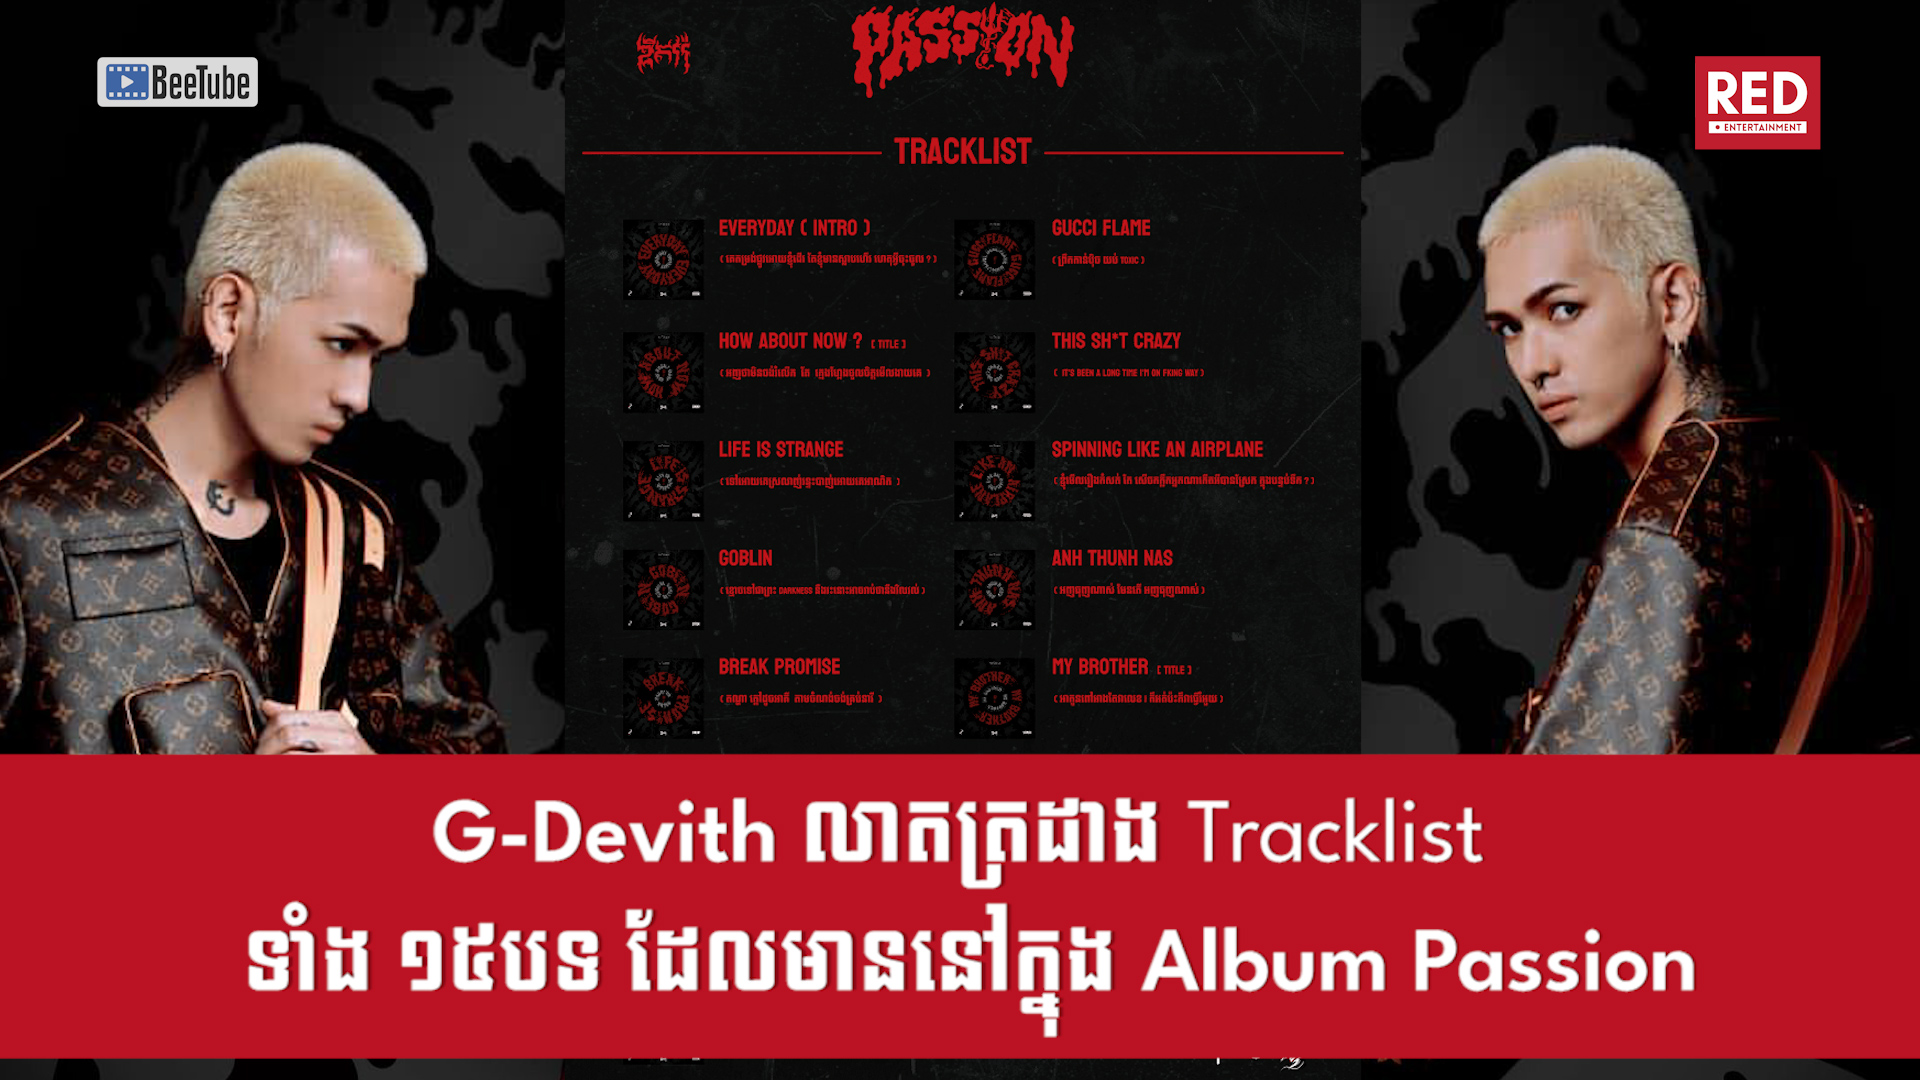 G-Devith លាតត្រដាង Tracklist ទាំង១៥បទដែលមាននៅក្នុង Album Passion ទី៣របស់ខ្លួន